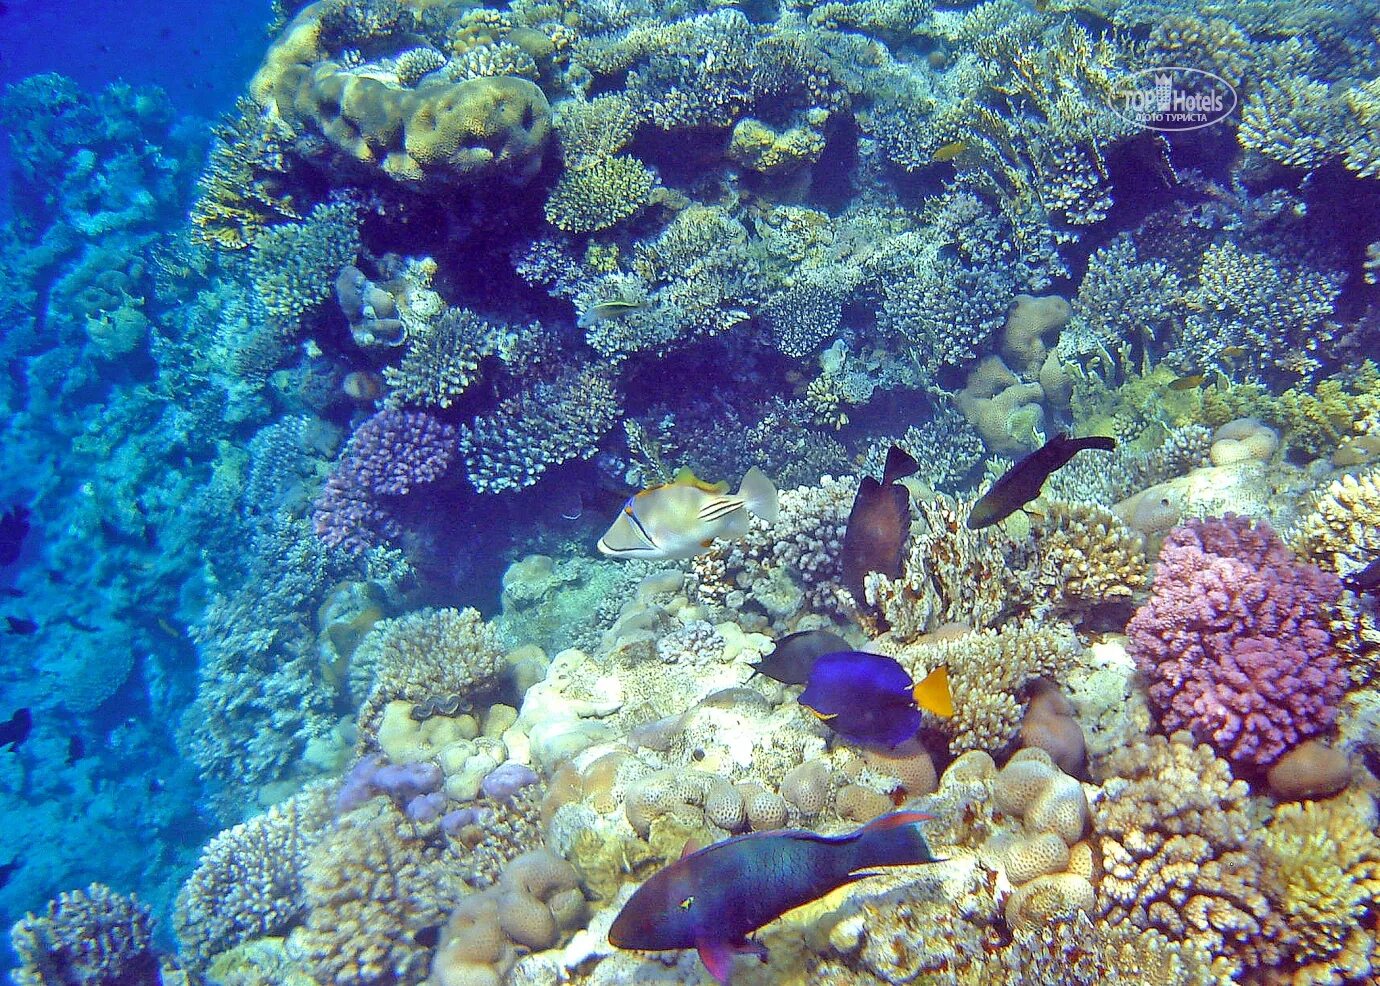 El coral. Шармаль Шейх море. Шарм Эль Шейх пляжи с рифами. Коралловый пляж Шарм-Эль-Шейх. Коралловый пляж шармаль Шейх.